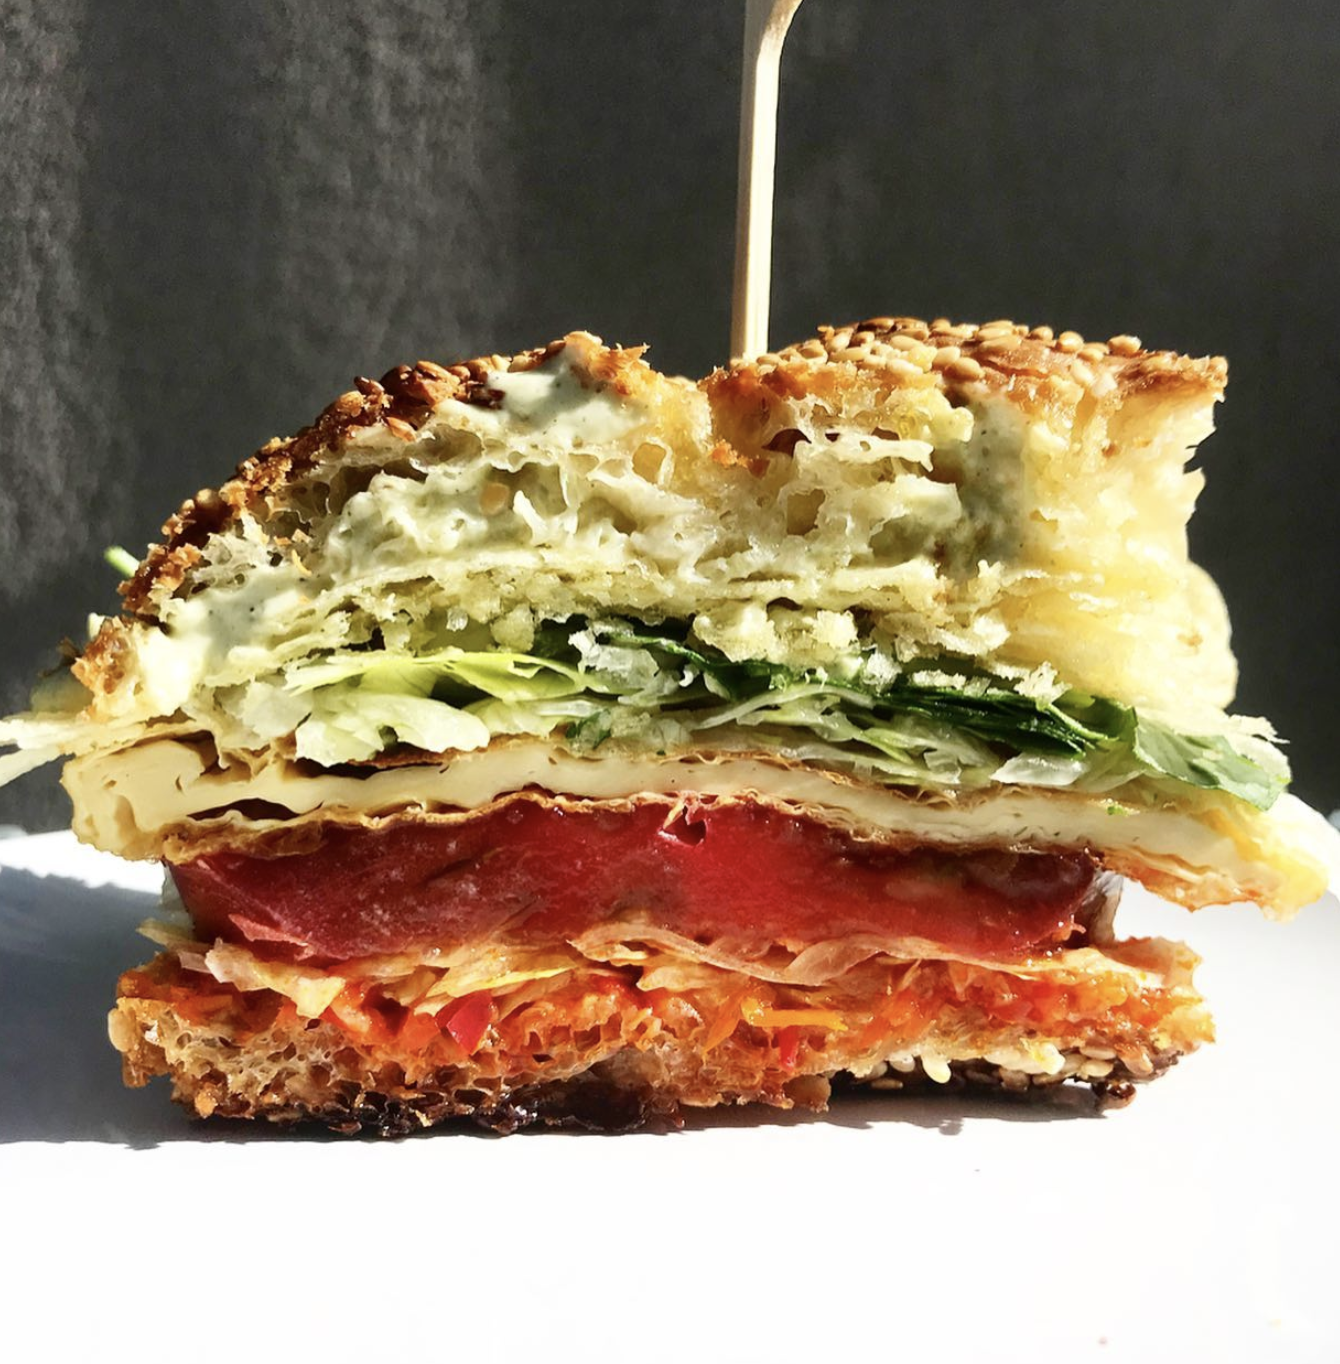 Sandwich made with tofu, tomatoes, and vegan mayo